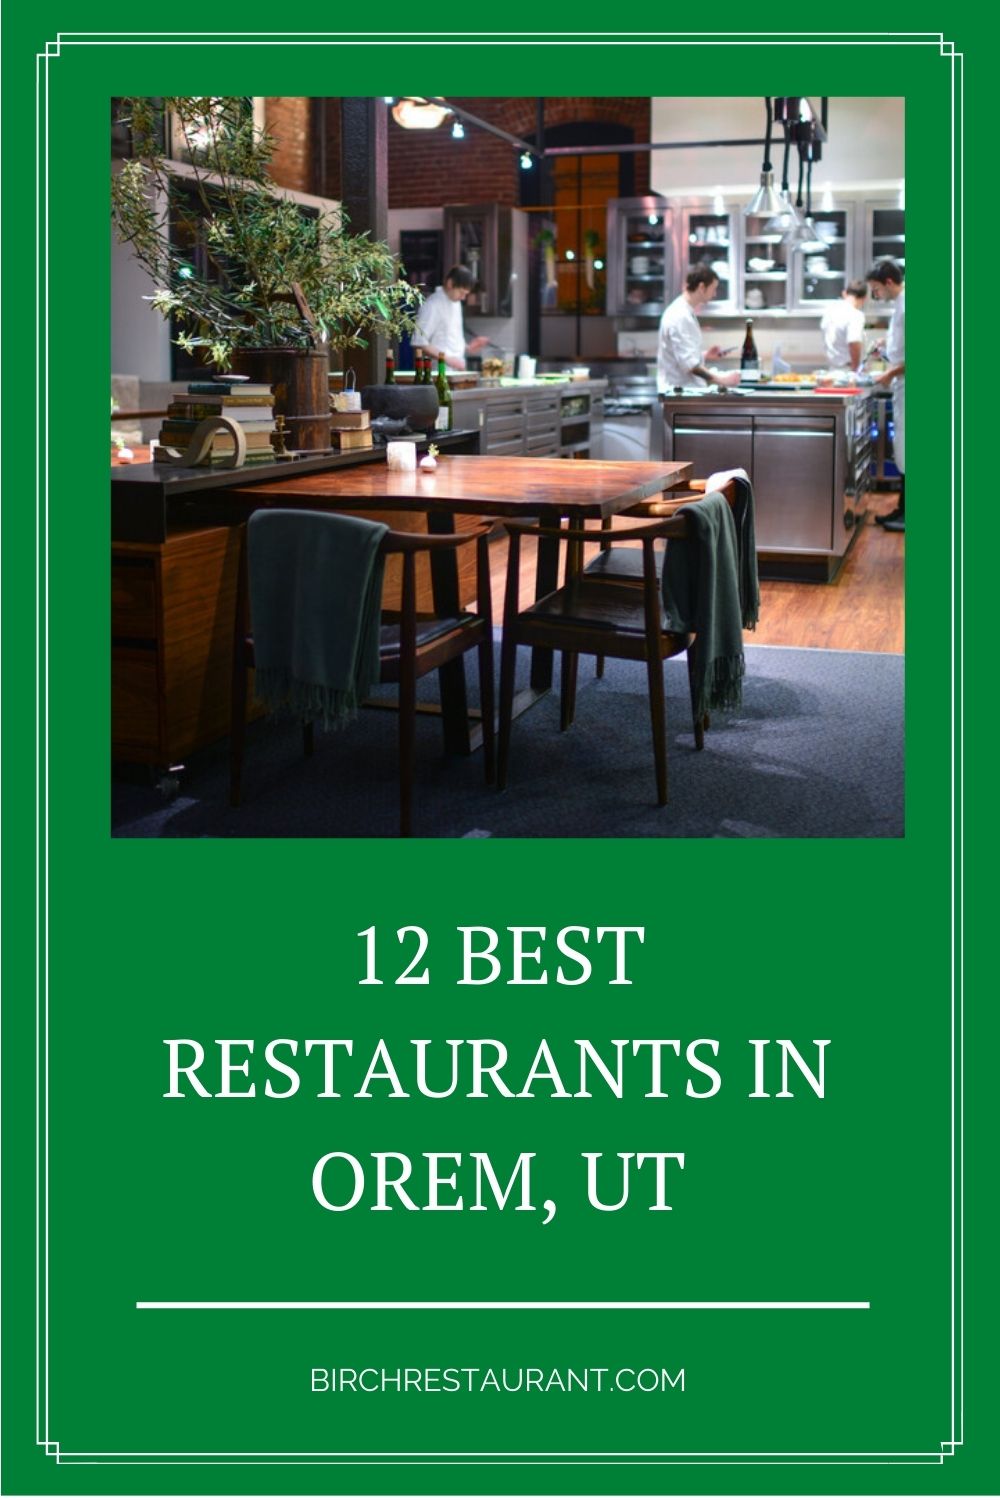 Best Restaurants in Orem